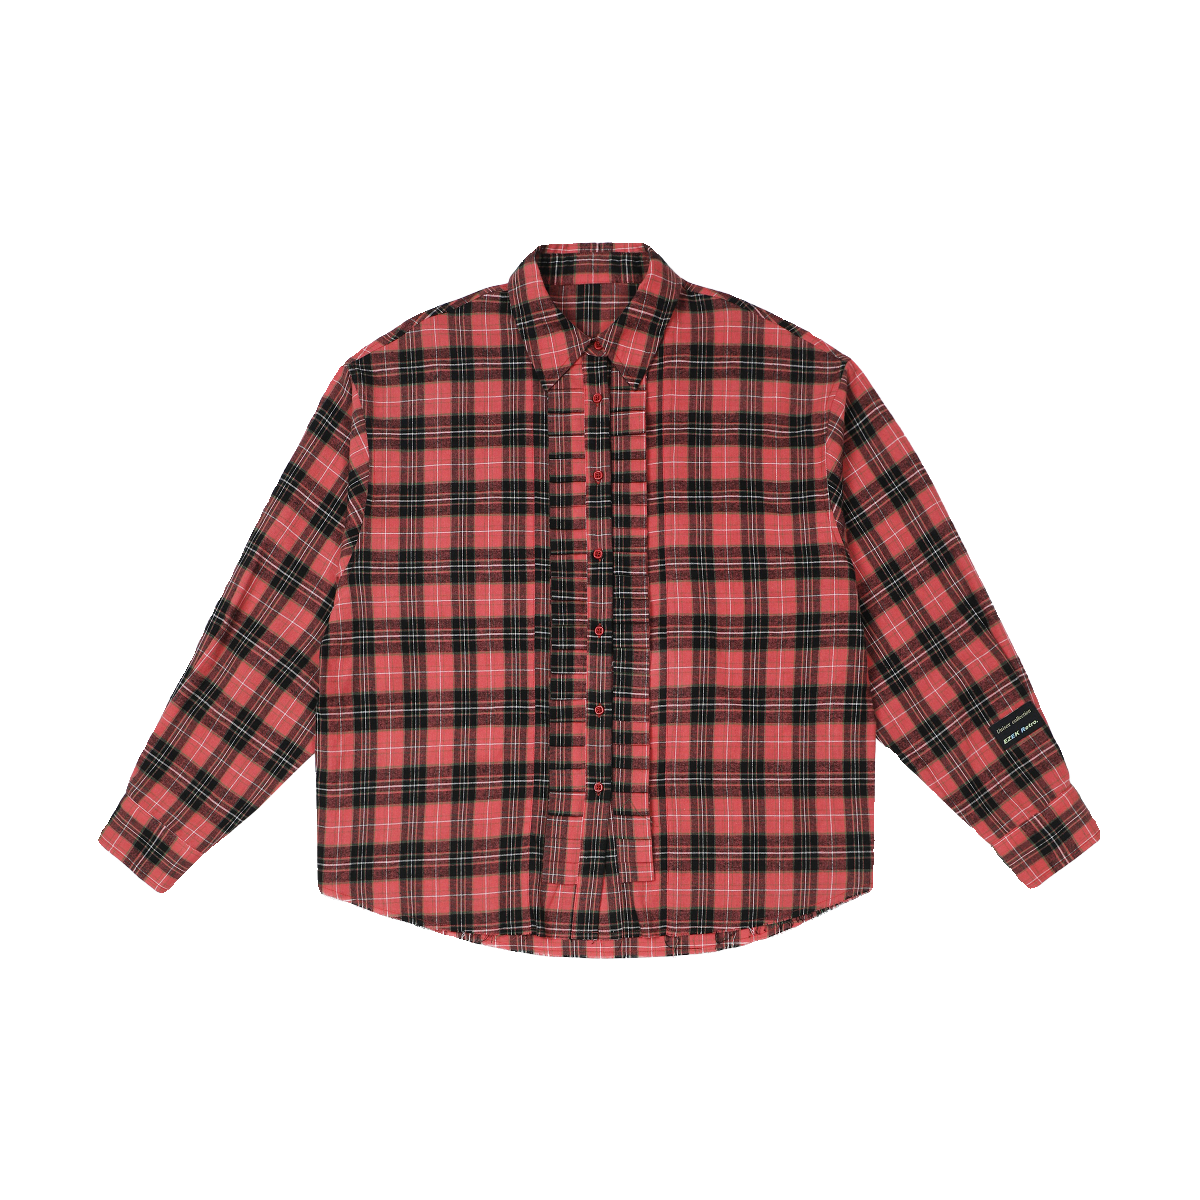 Color Contrast Design Checkered Shirt NA2489